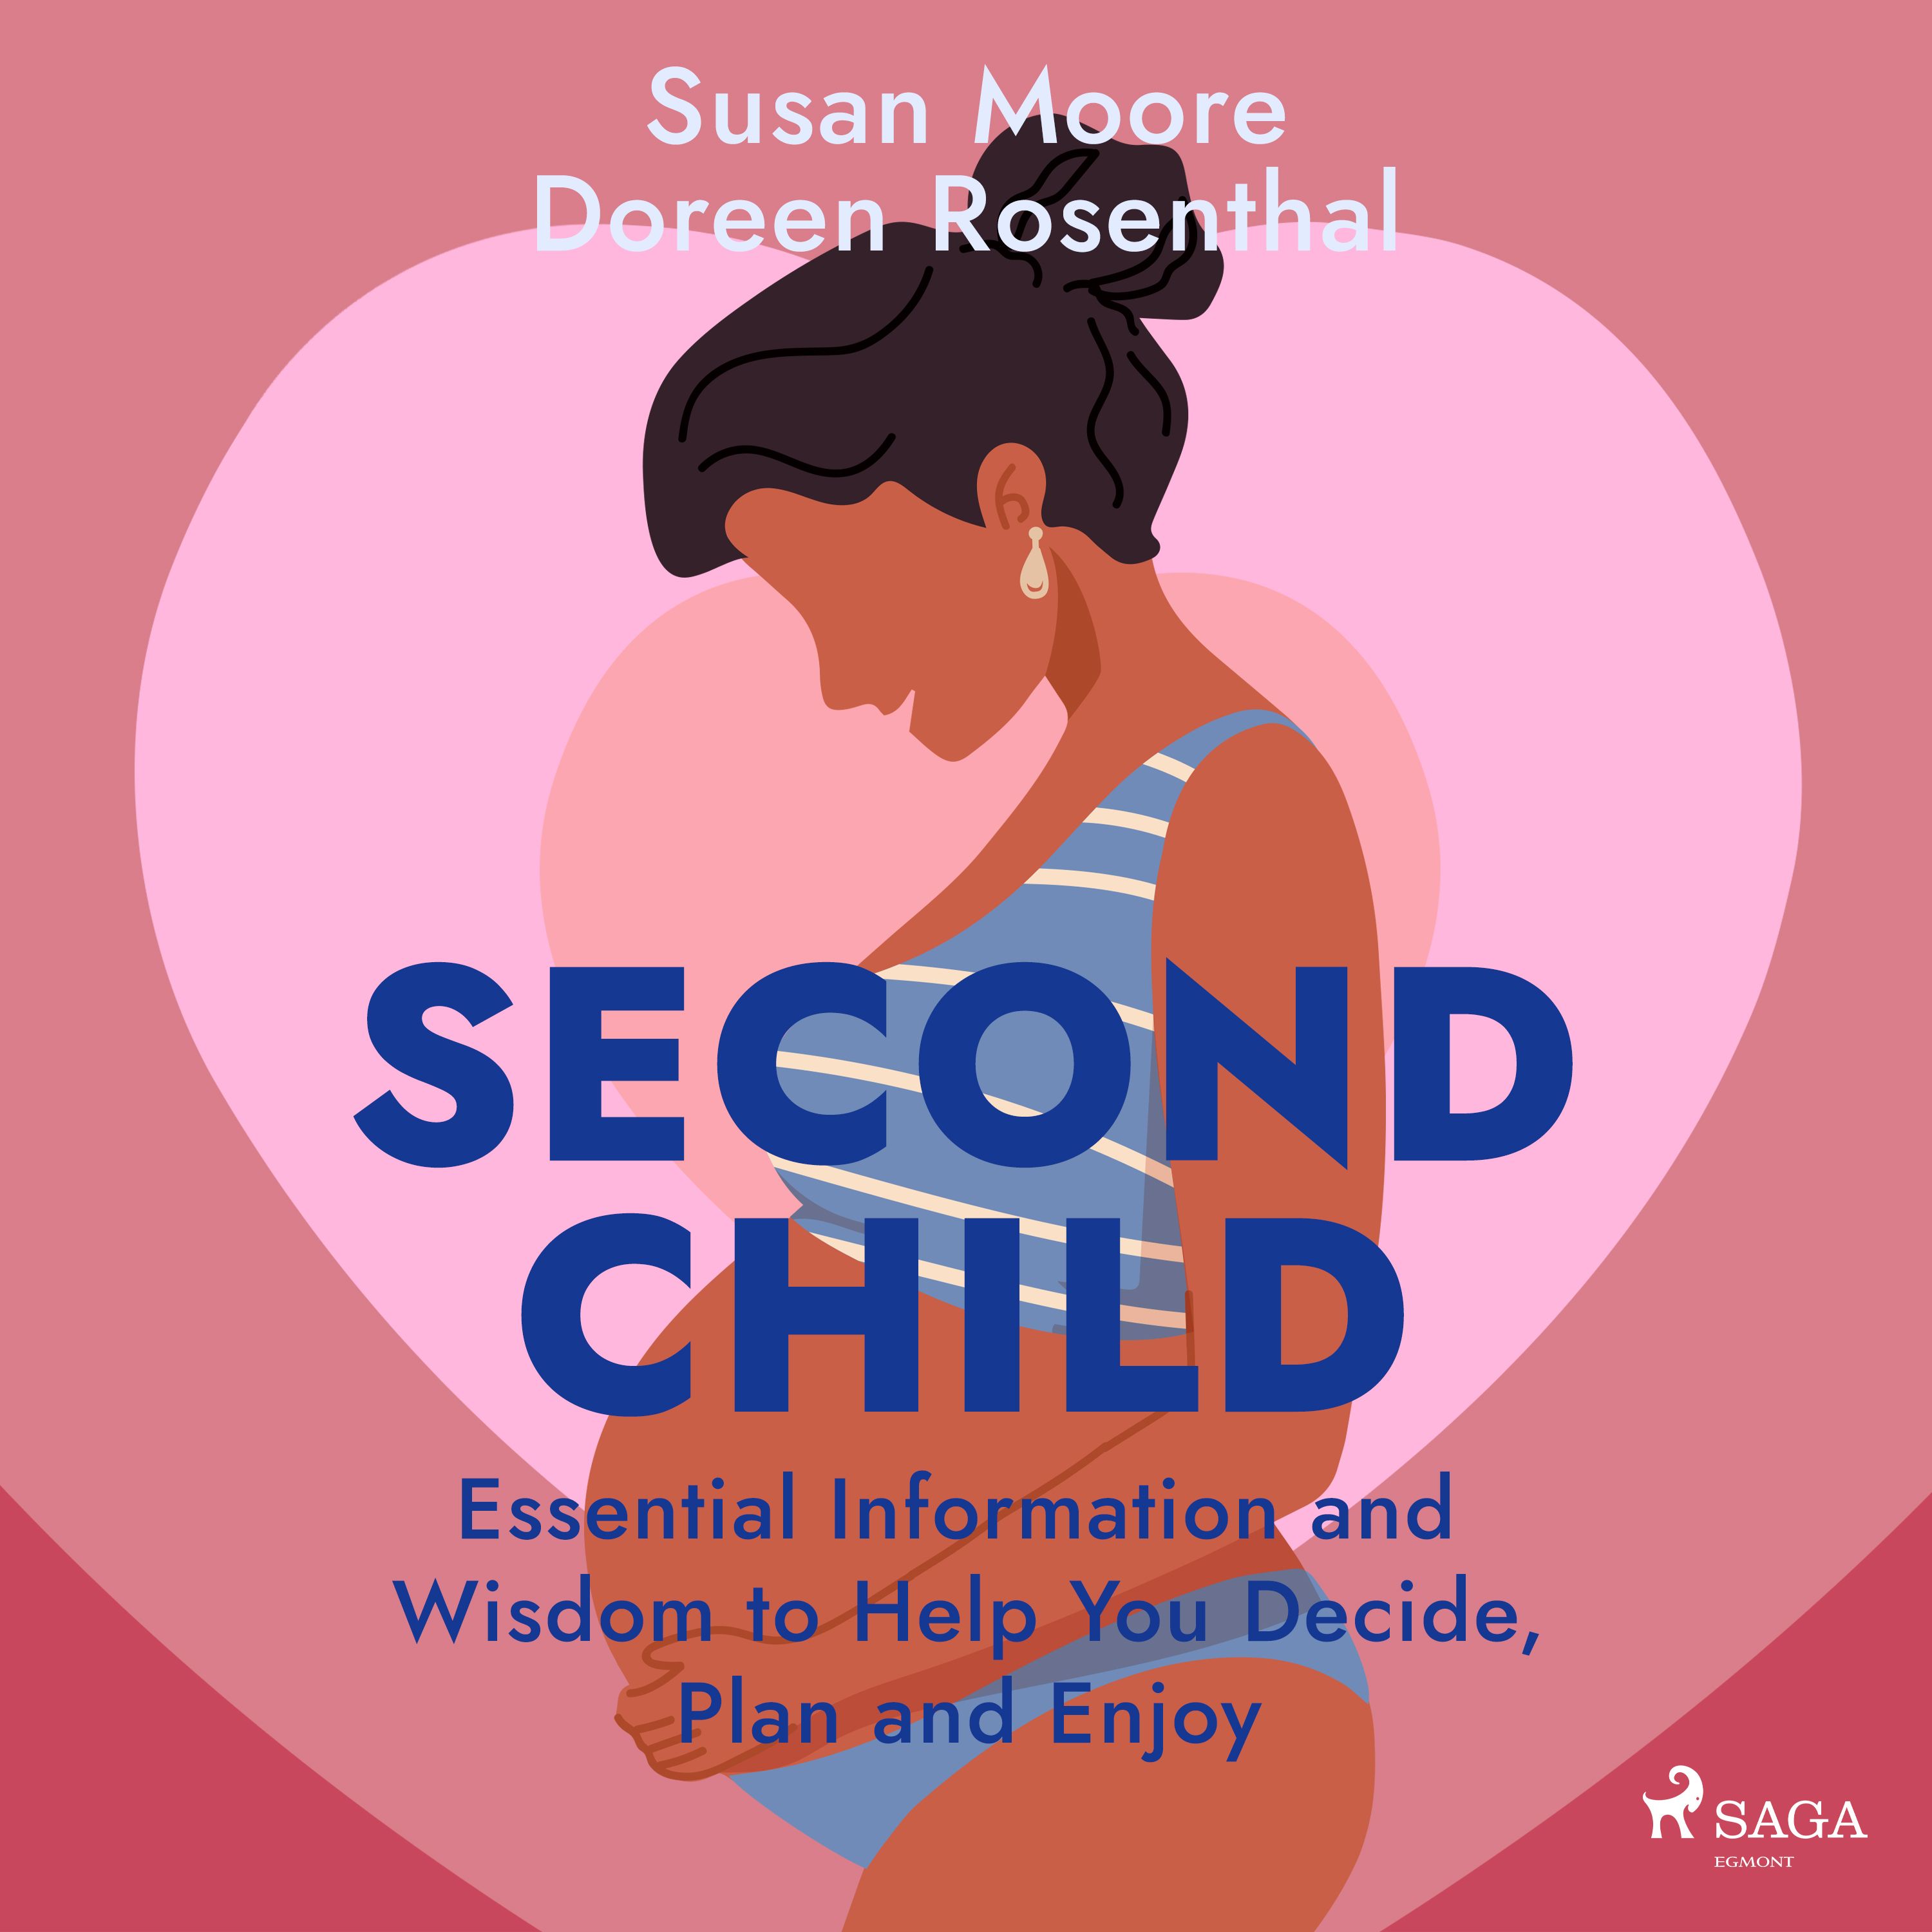 Second Child: Essential Information and Wisdom to Help You Decide, Plan and Enjoy, ljudbok av Susan Moore, Doreen Rosenthal